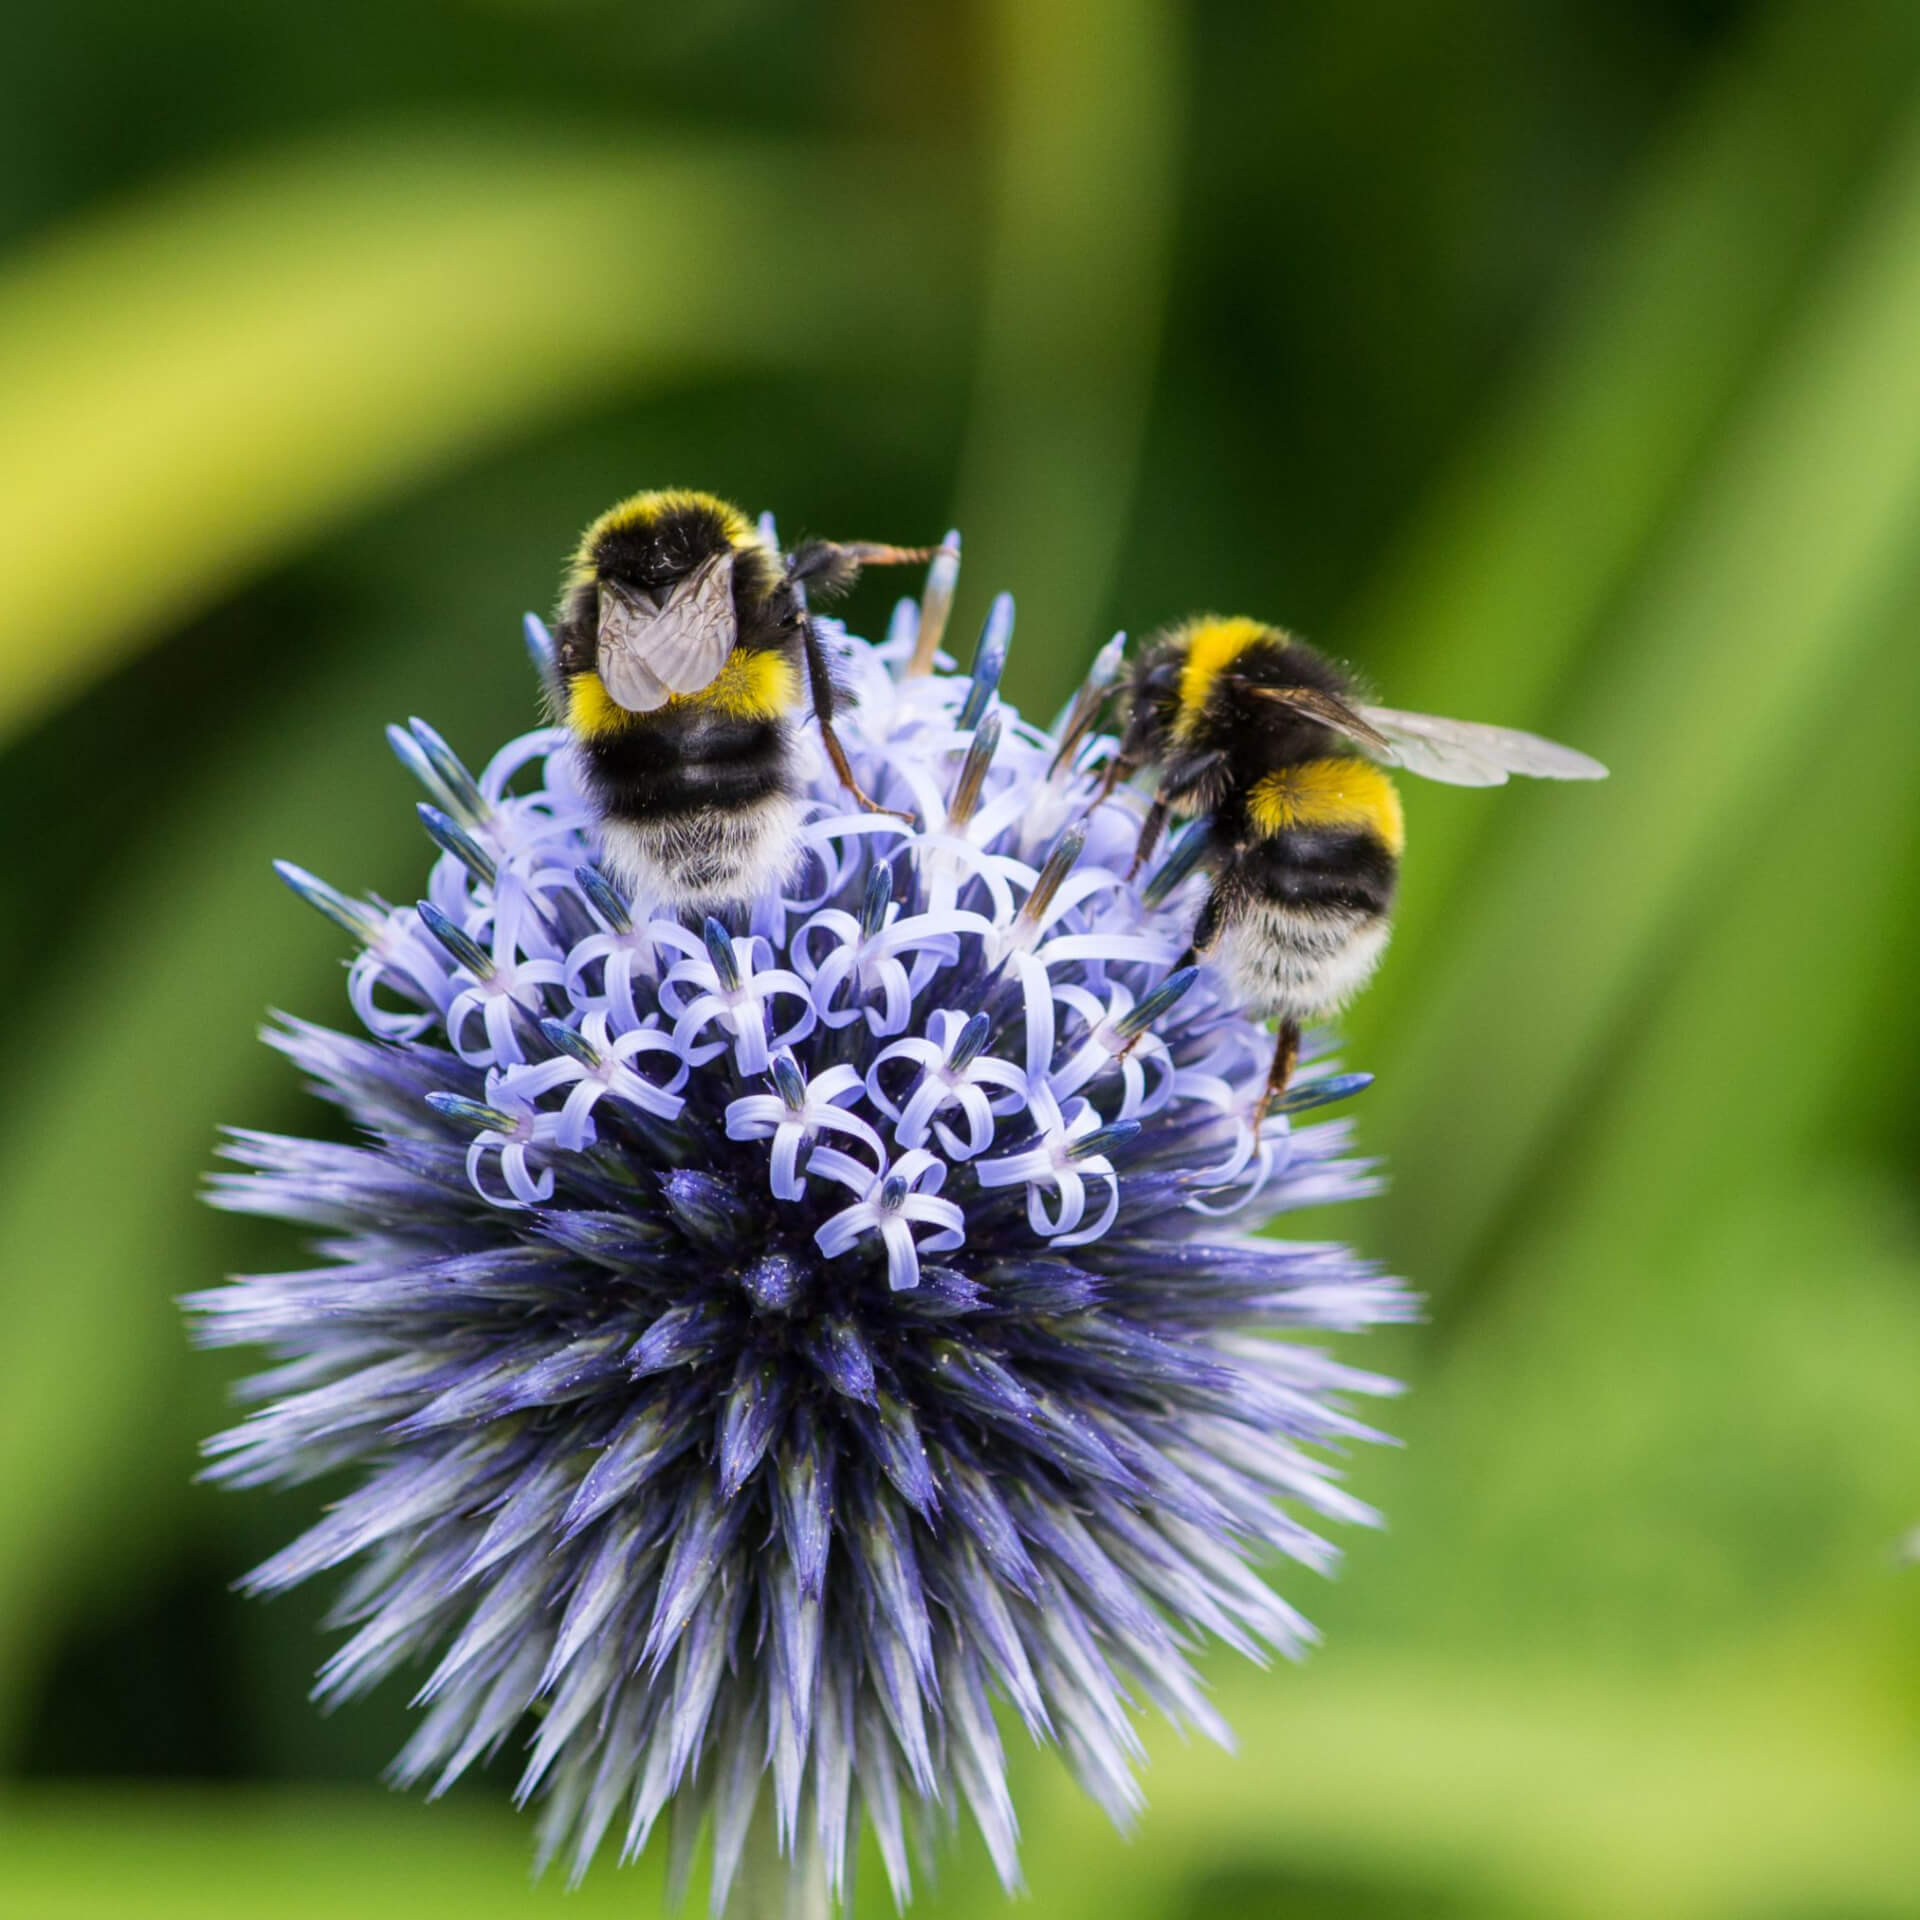 White-tailed bumblebee - Calum's favourite bee